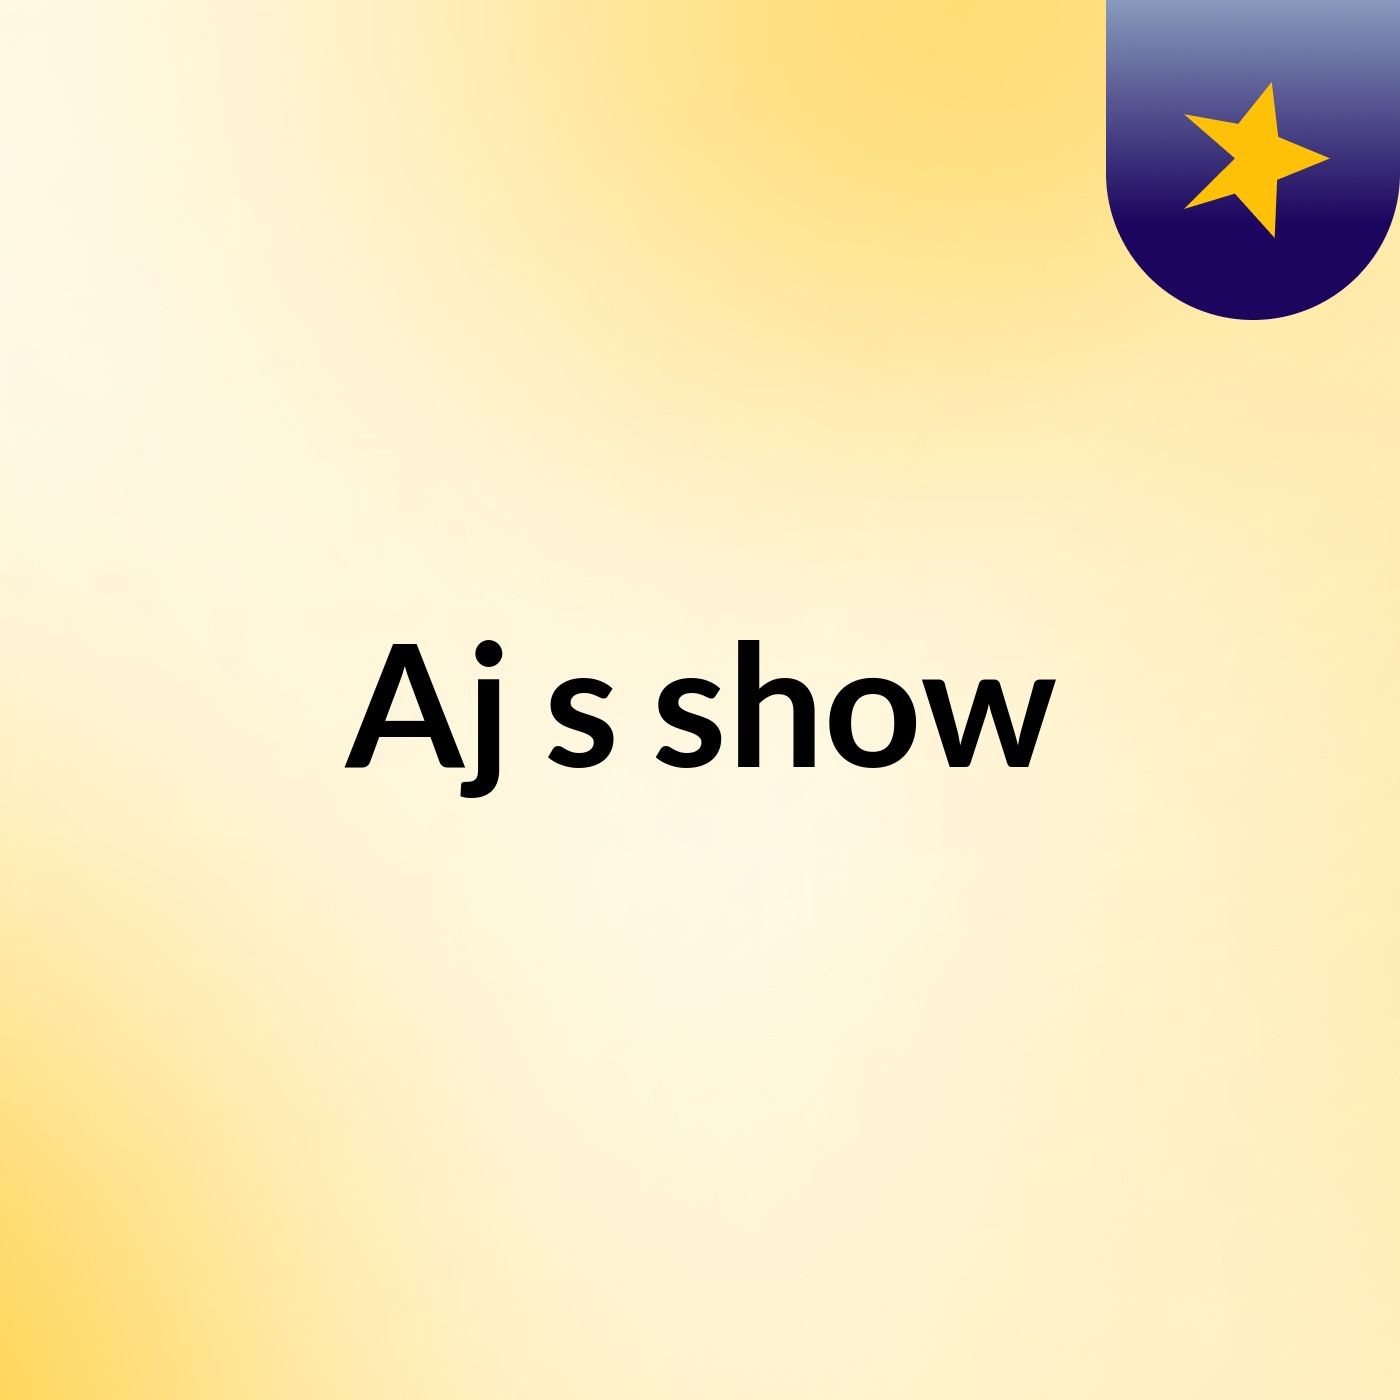 Aj's show